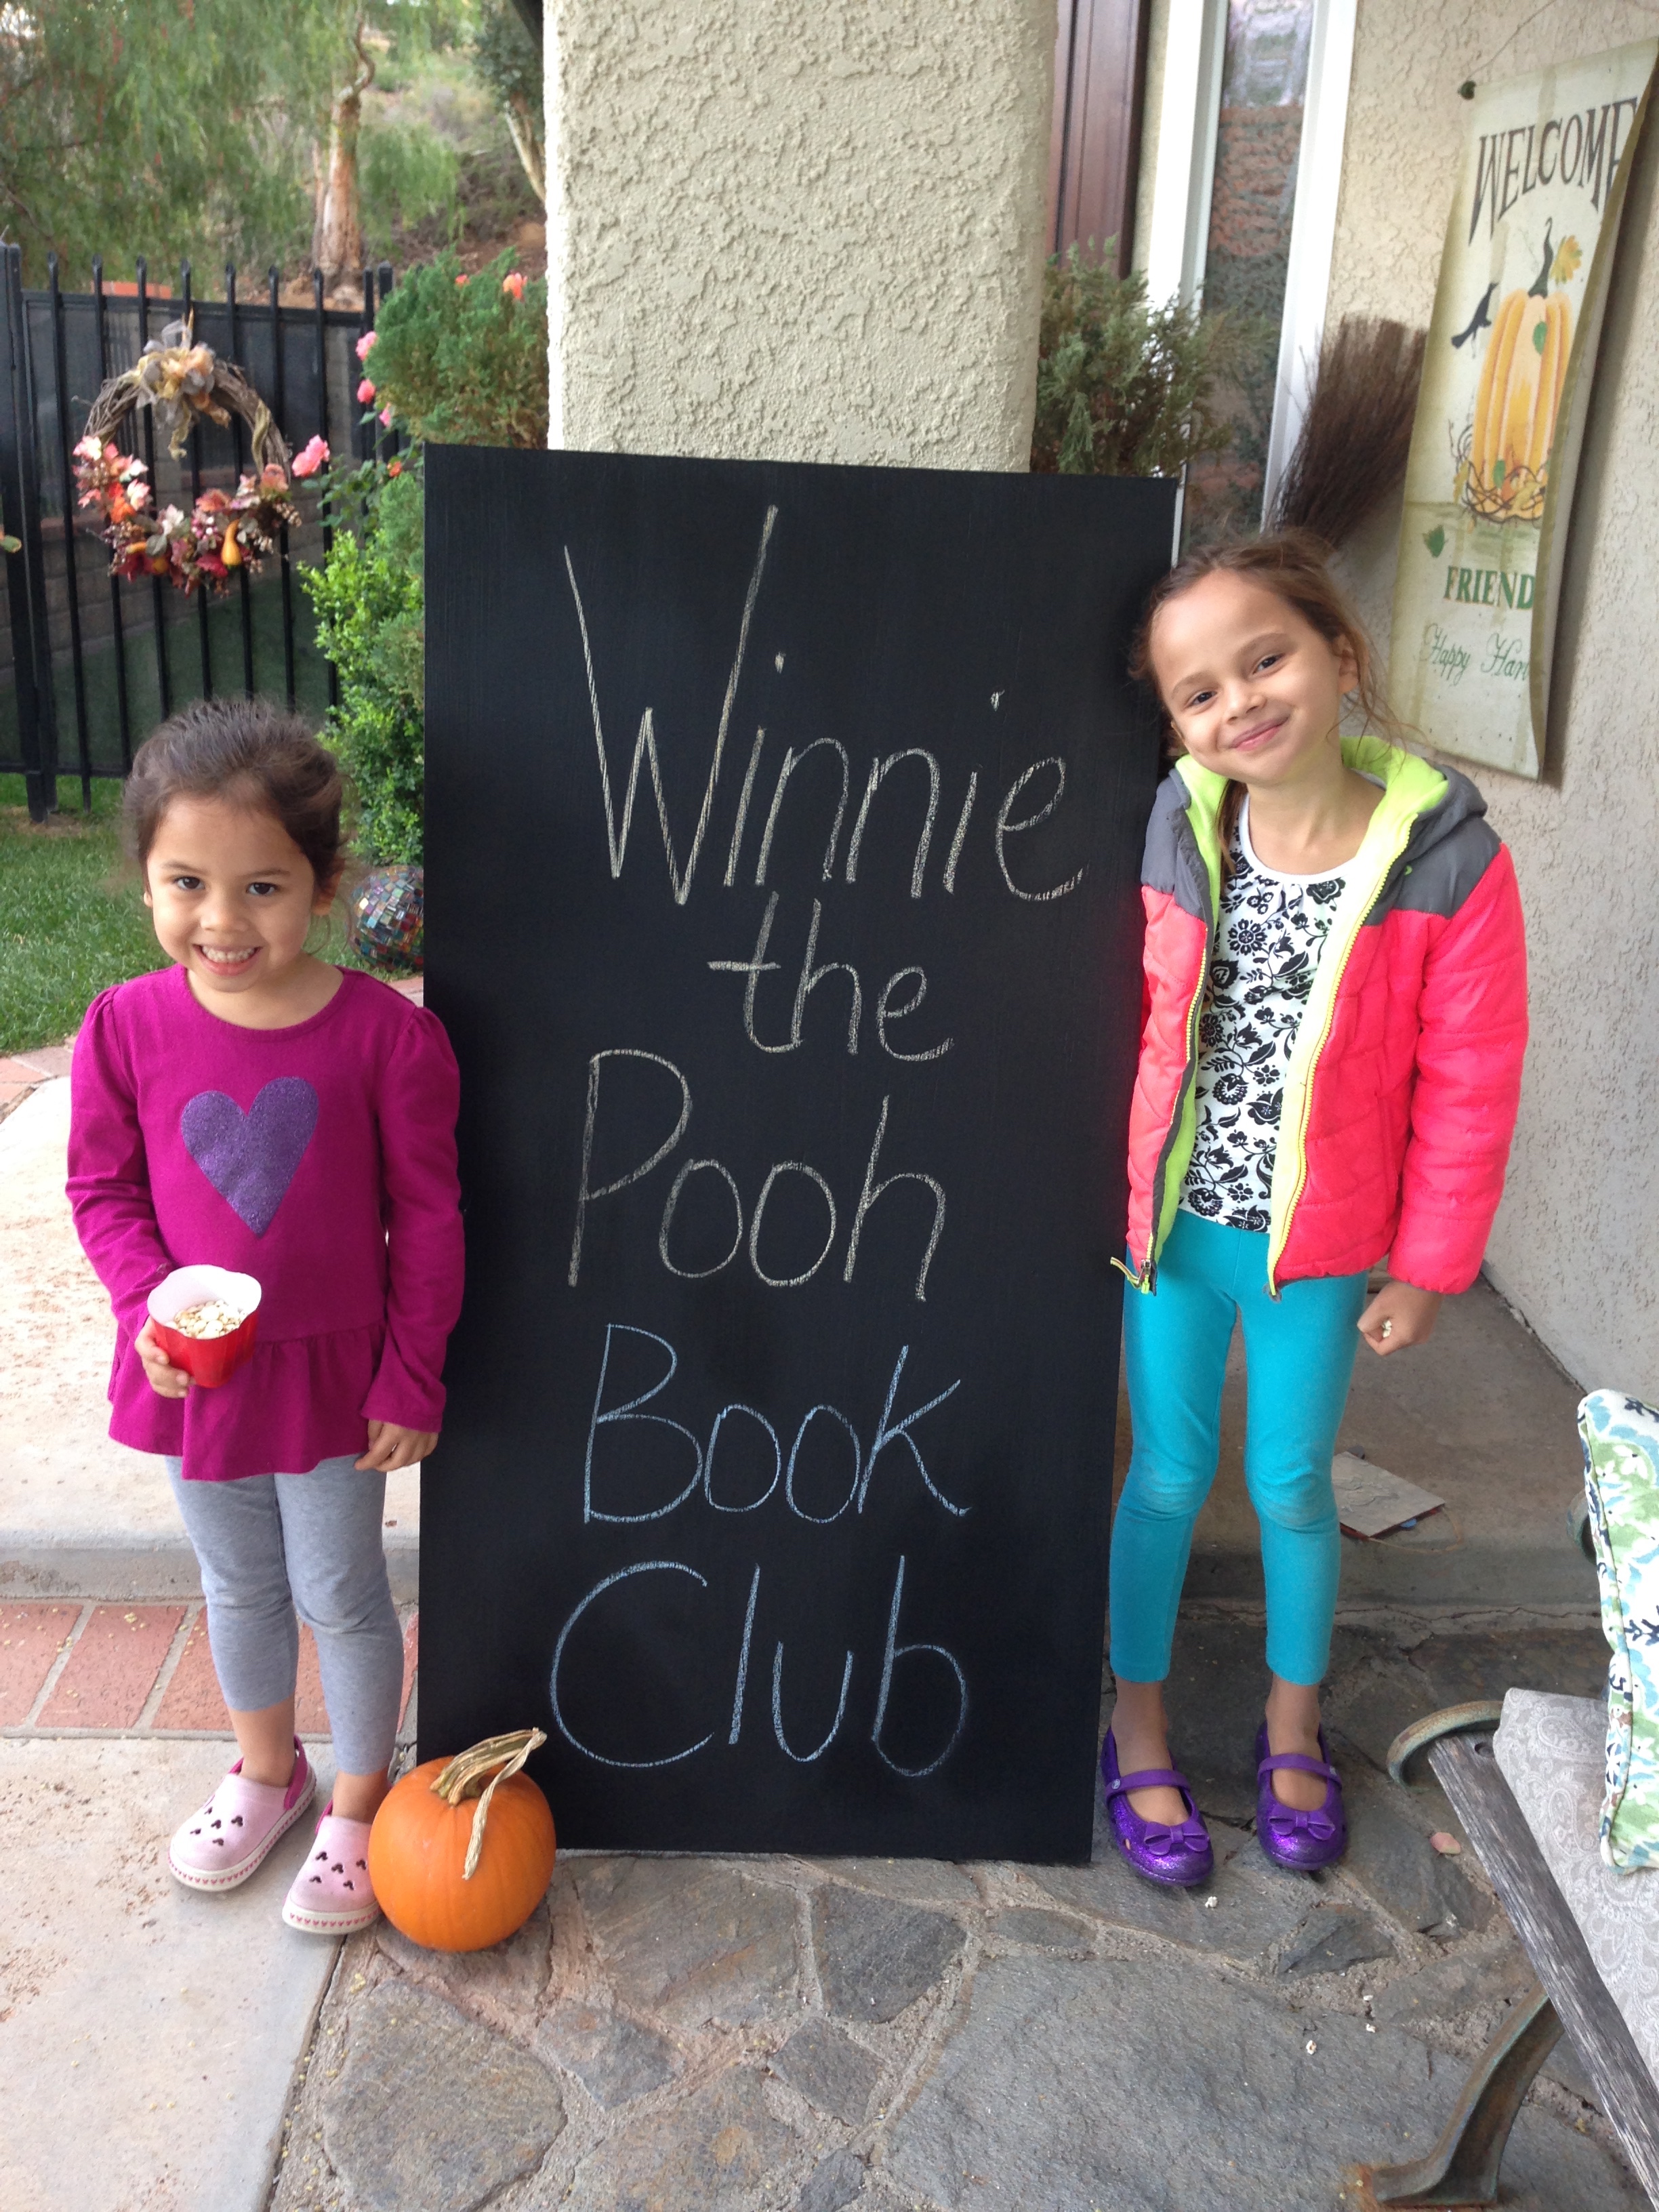 Welcome to Winnie Book Club!